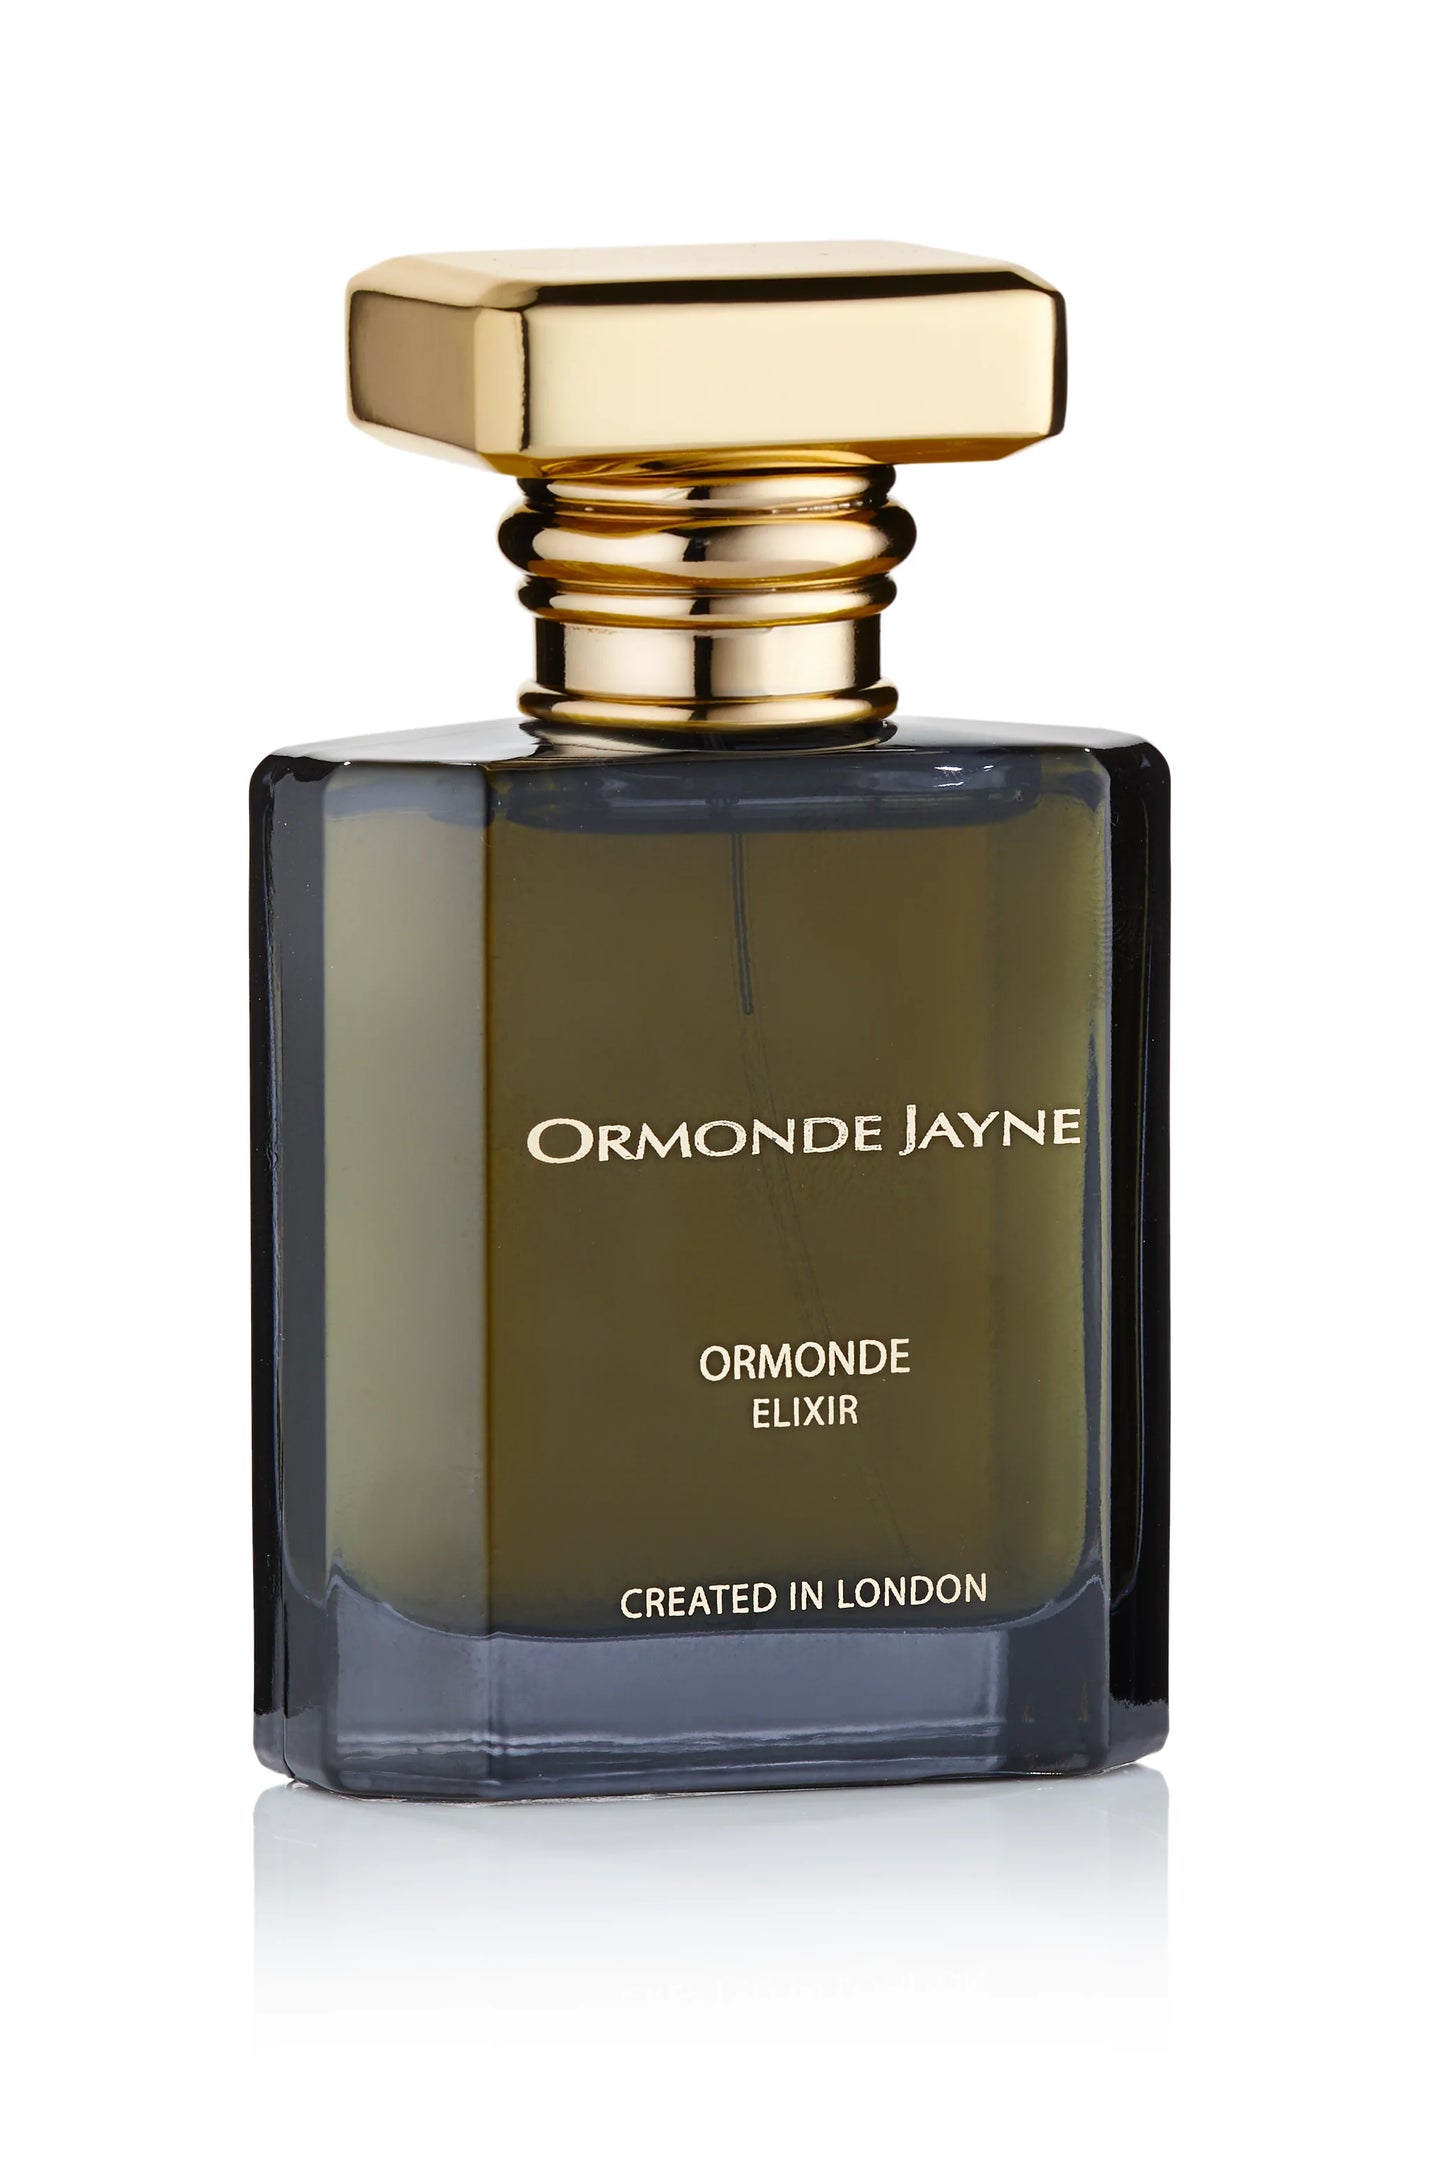 Ormonde Jayne Ormonde Elixir 2ml 0.06 fl. oz eșantion oficial de parfum